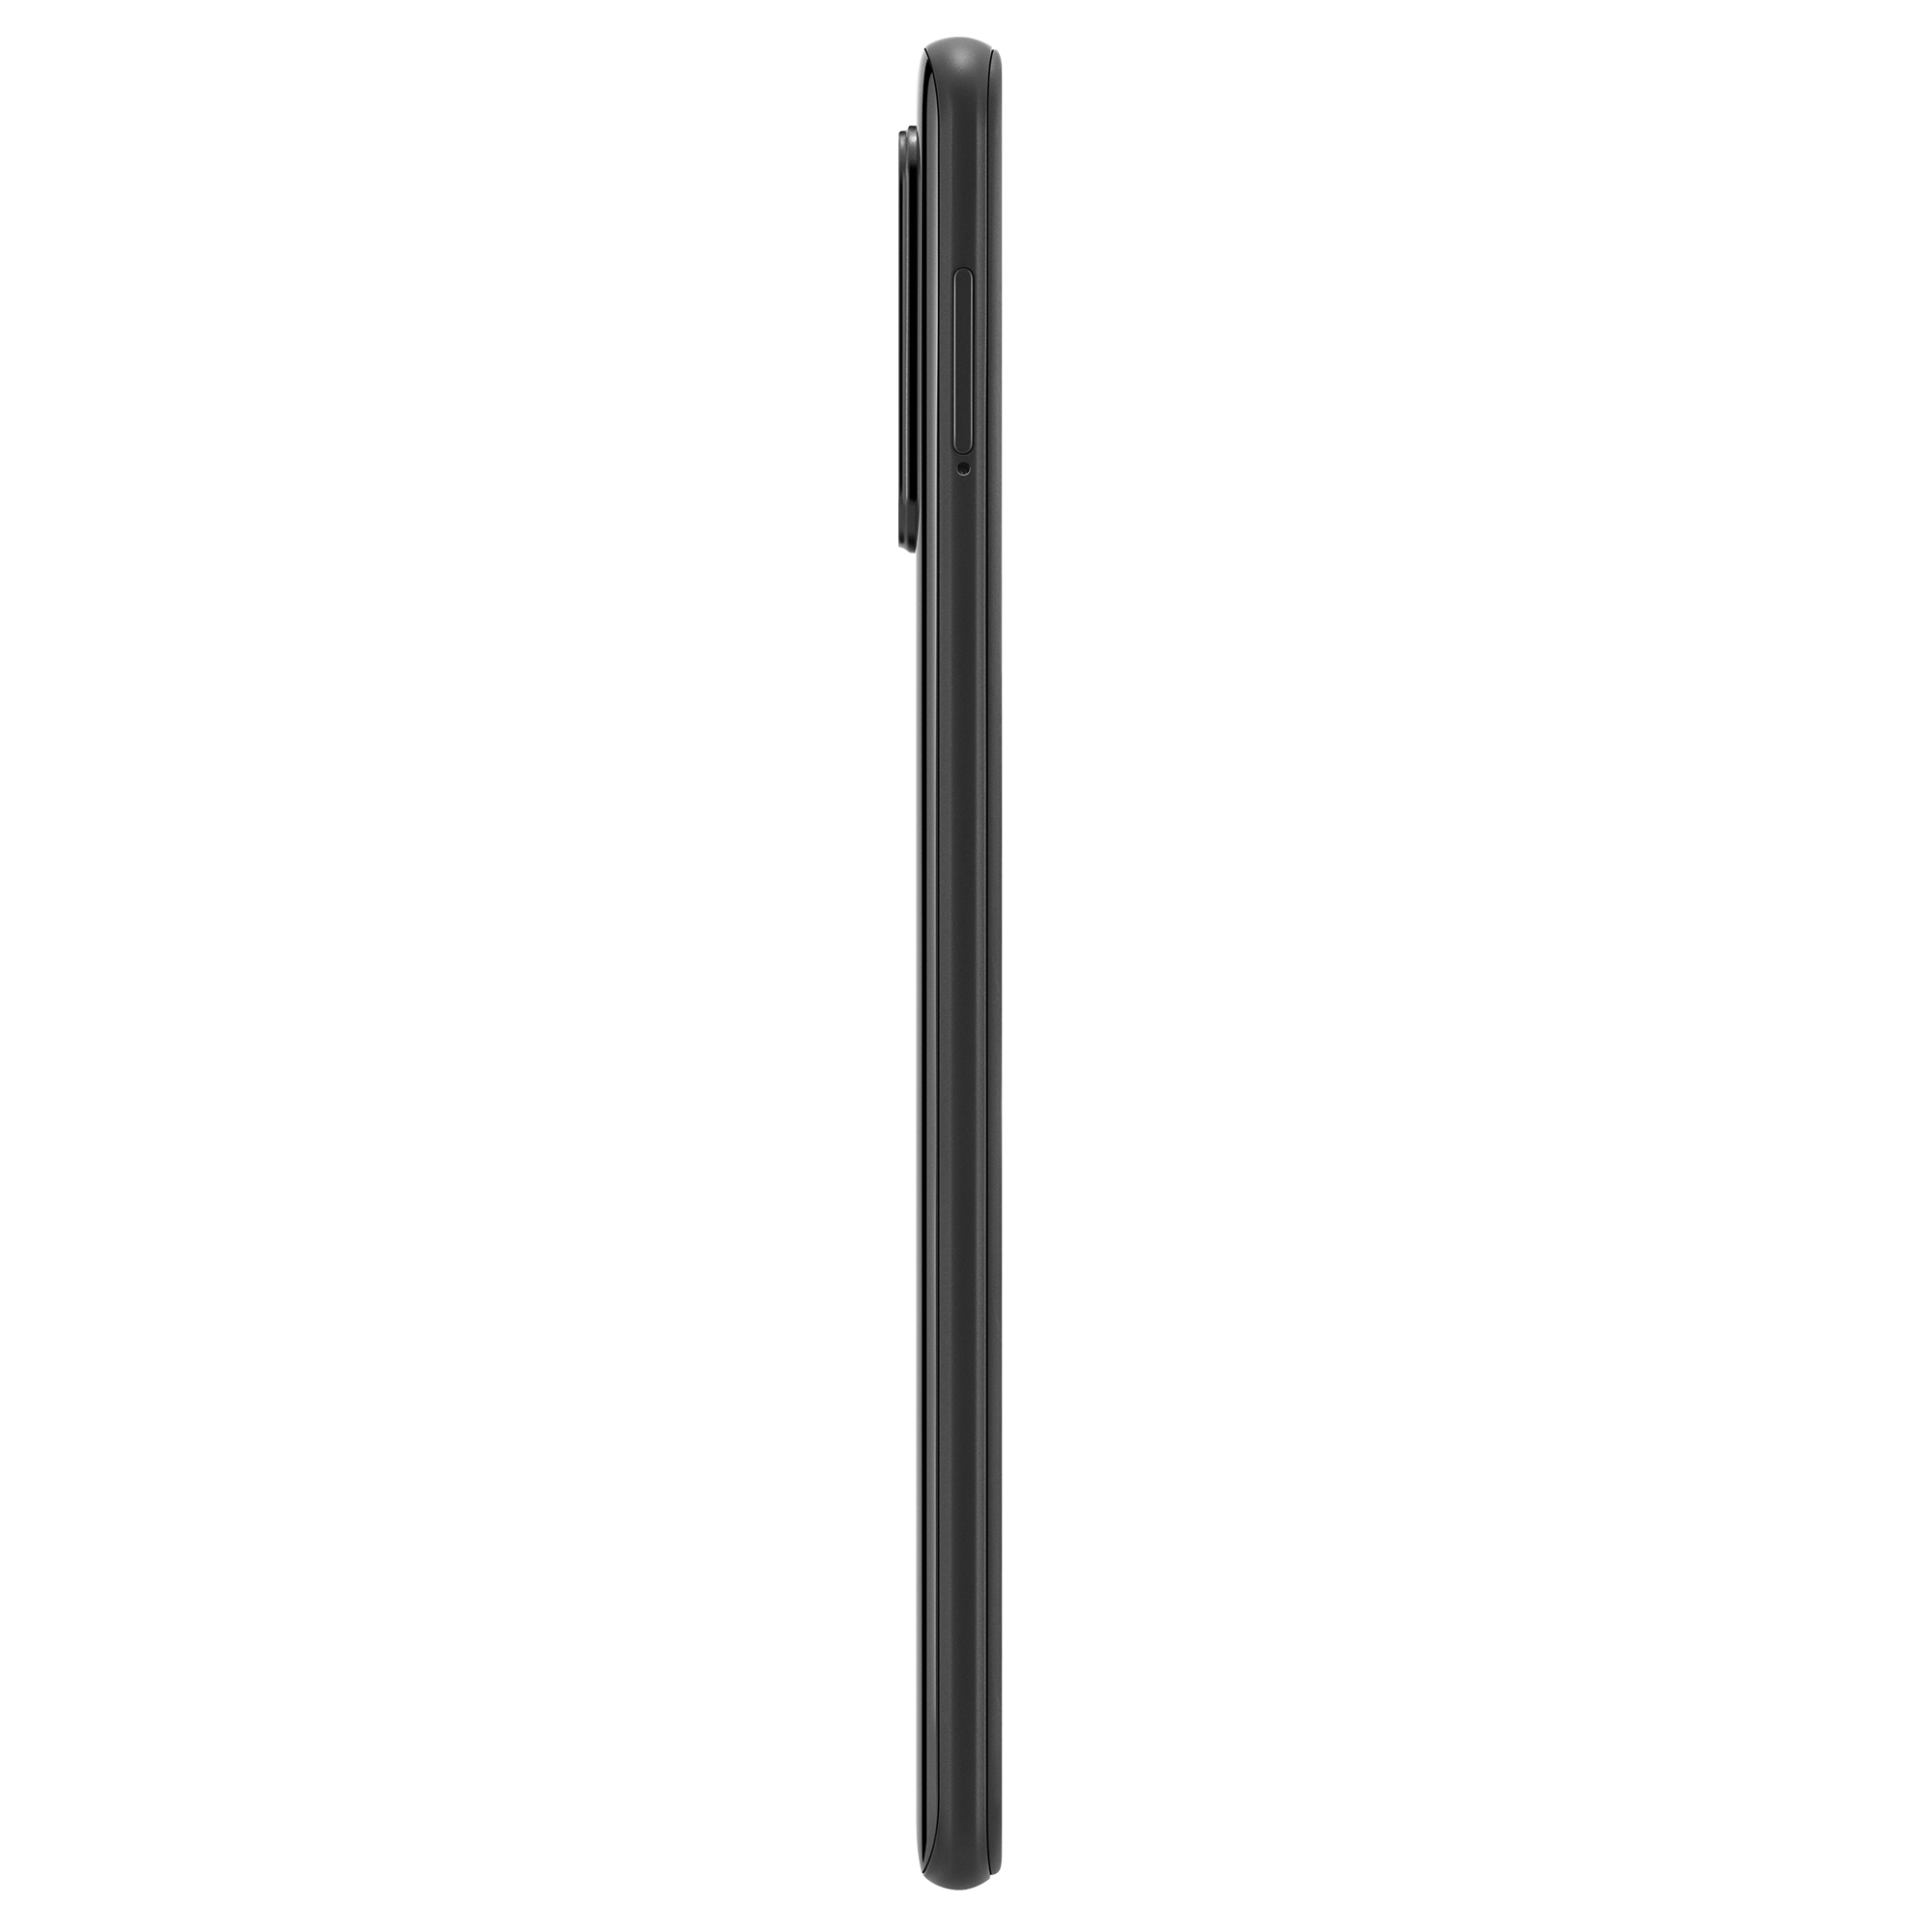 Straight Talk SAMSUNG Galaxy A21, 32GB Black- Prepaid Smartphone - image 10 of 11